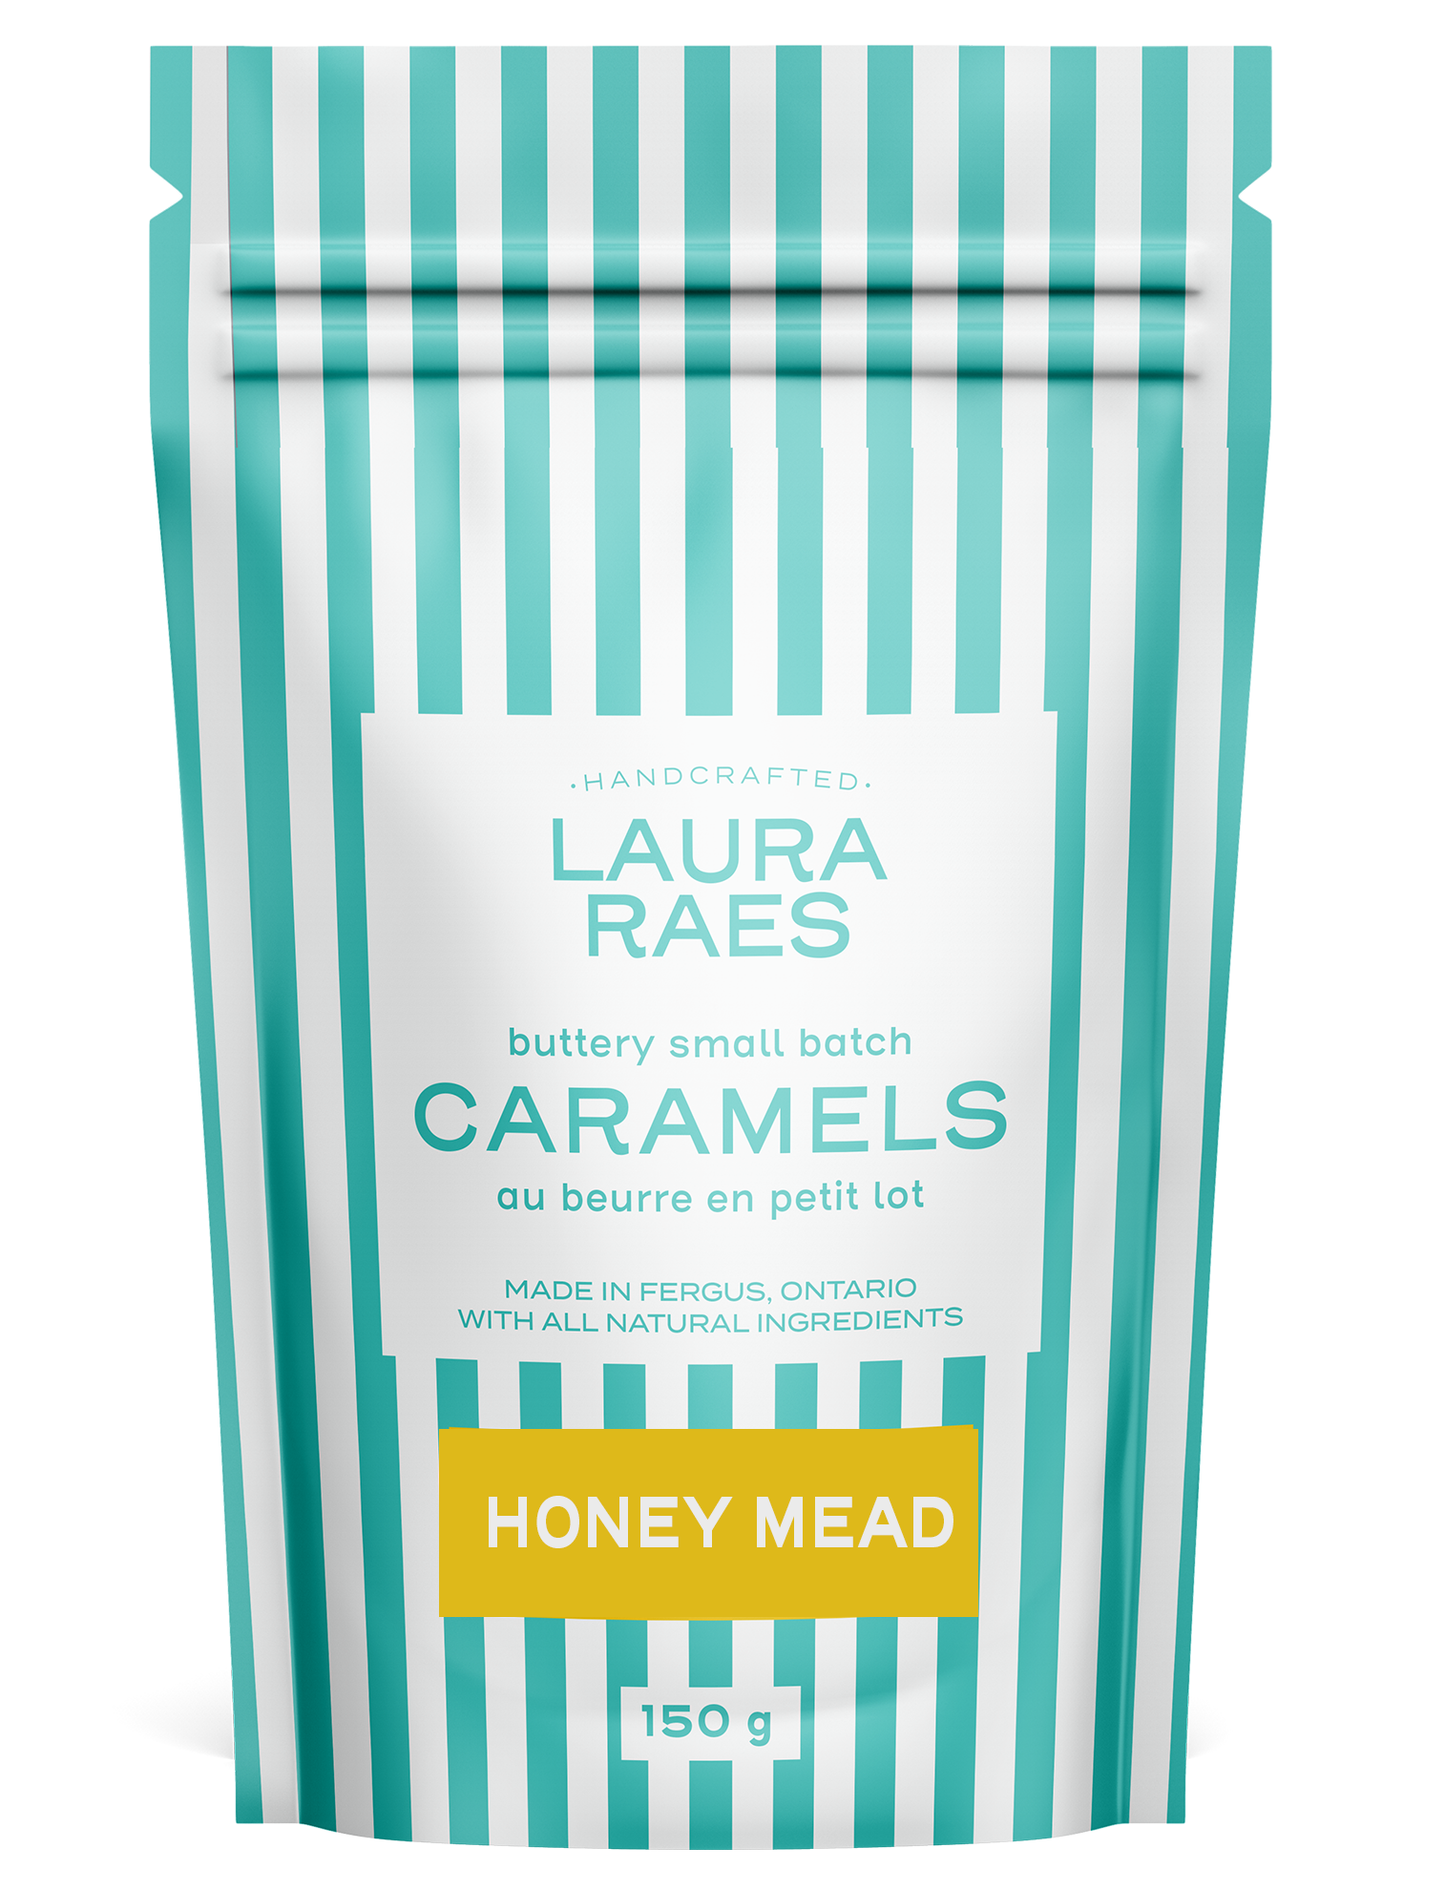 Honey Mead Caramel Candies - Laura Raes Caramel Co.